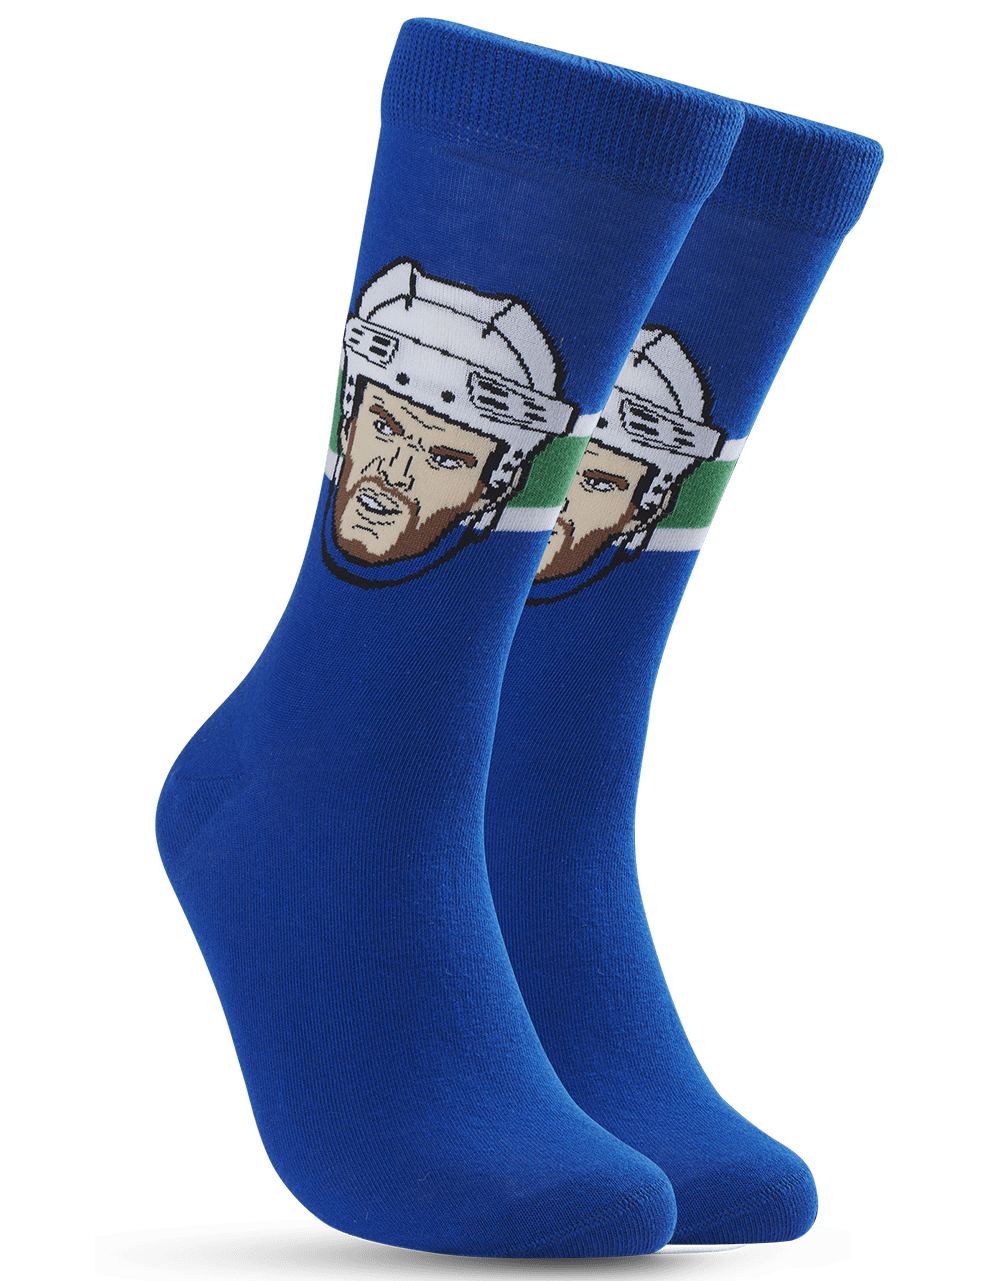 Vancouver Canucks Major League Socks - Kevin Bieksa - TheHockeyShop.com